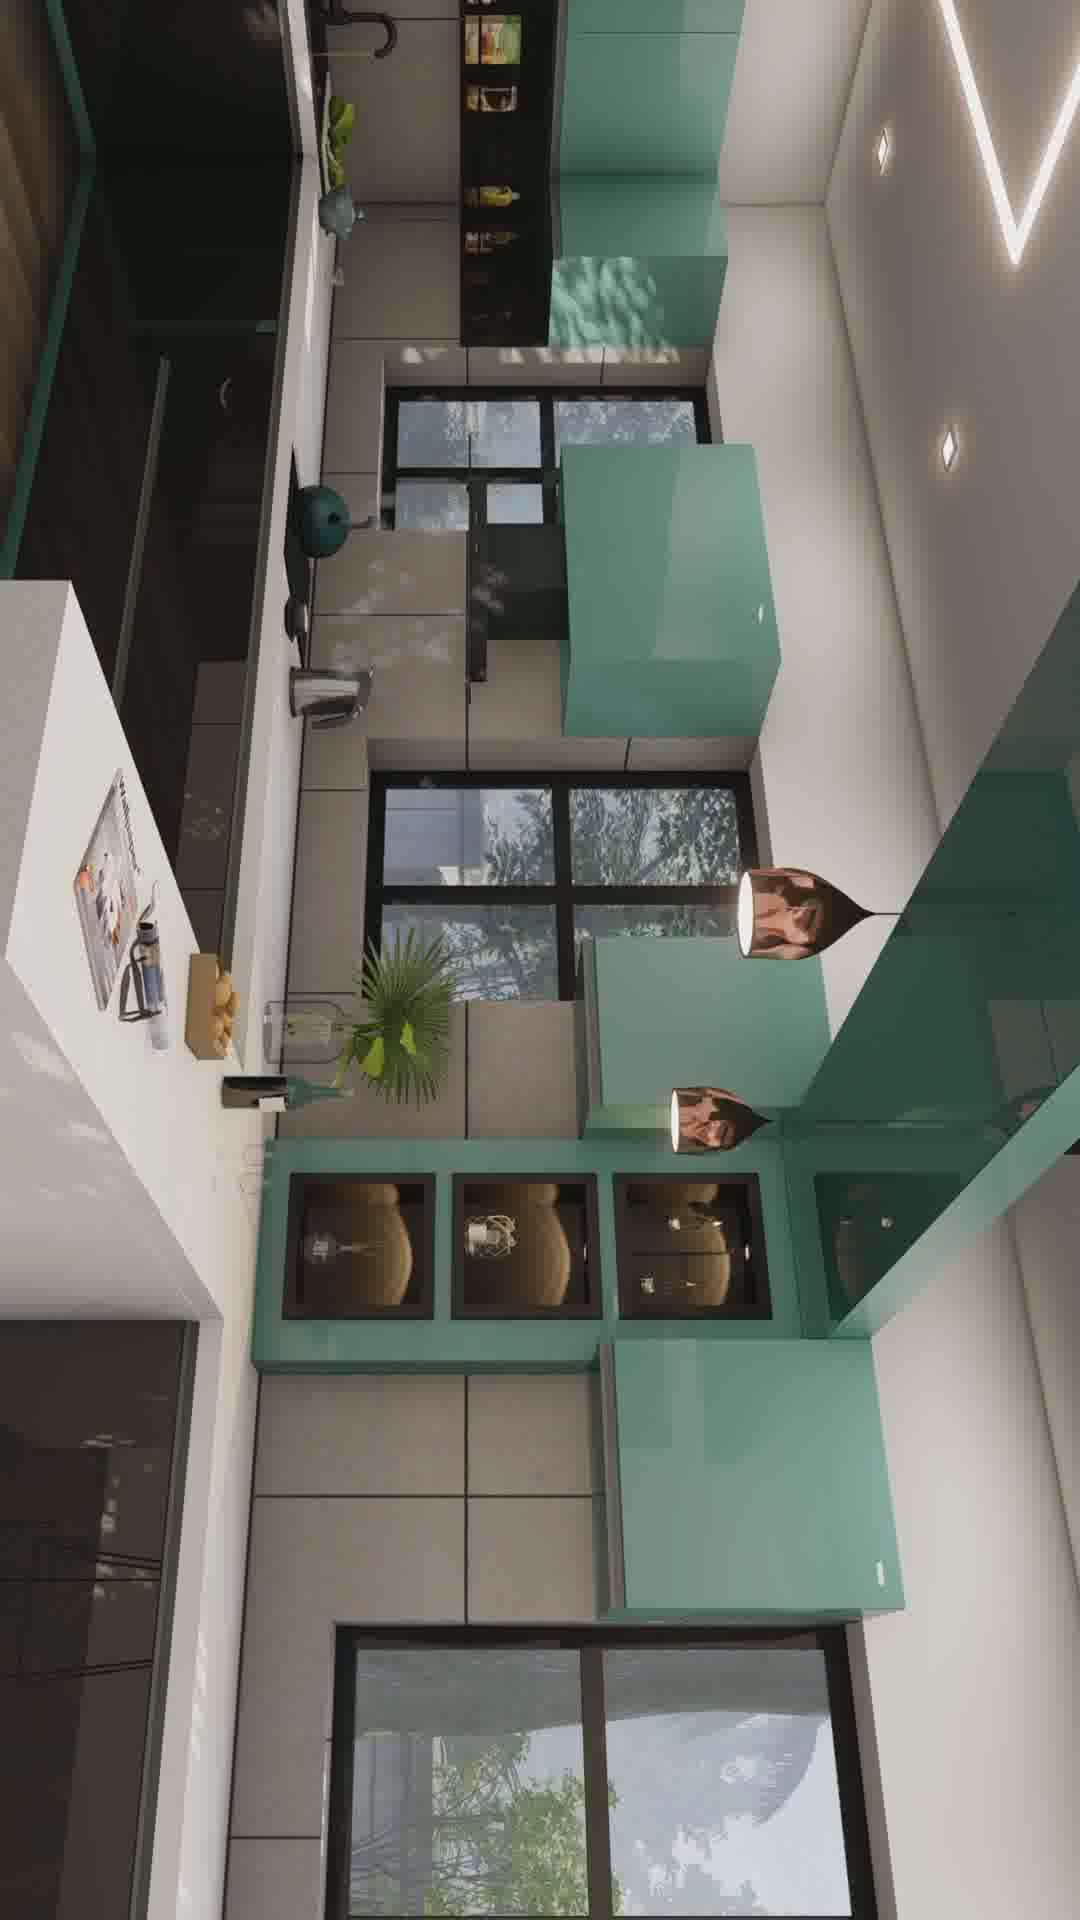 New Modular Kitchen design
#interior #Architecture #designer #ModularKitchen #kerala #wayanad #budget_home_simple_interi #super #epicstudio #Kozhikode #simple #color #multywoodcarvingb